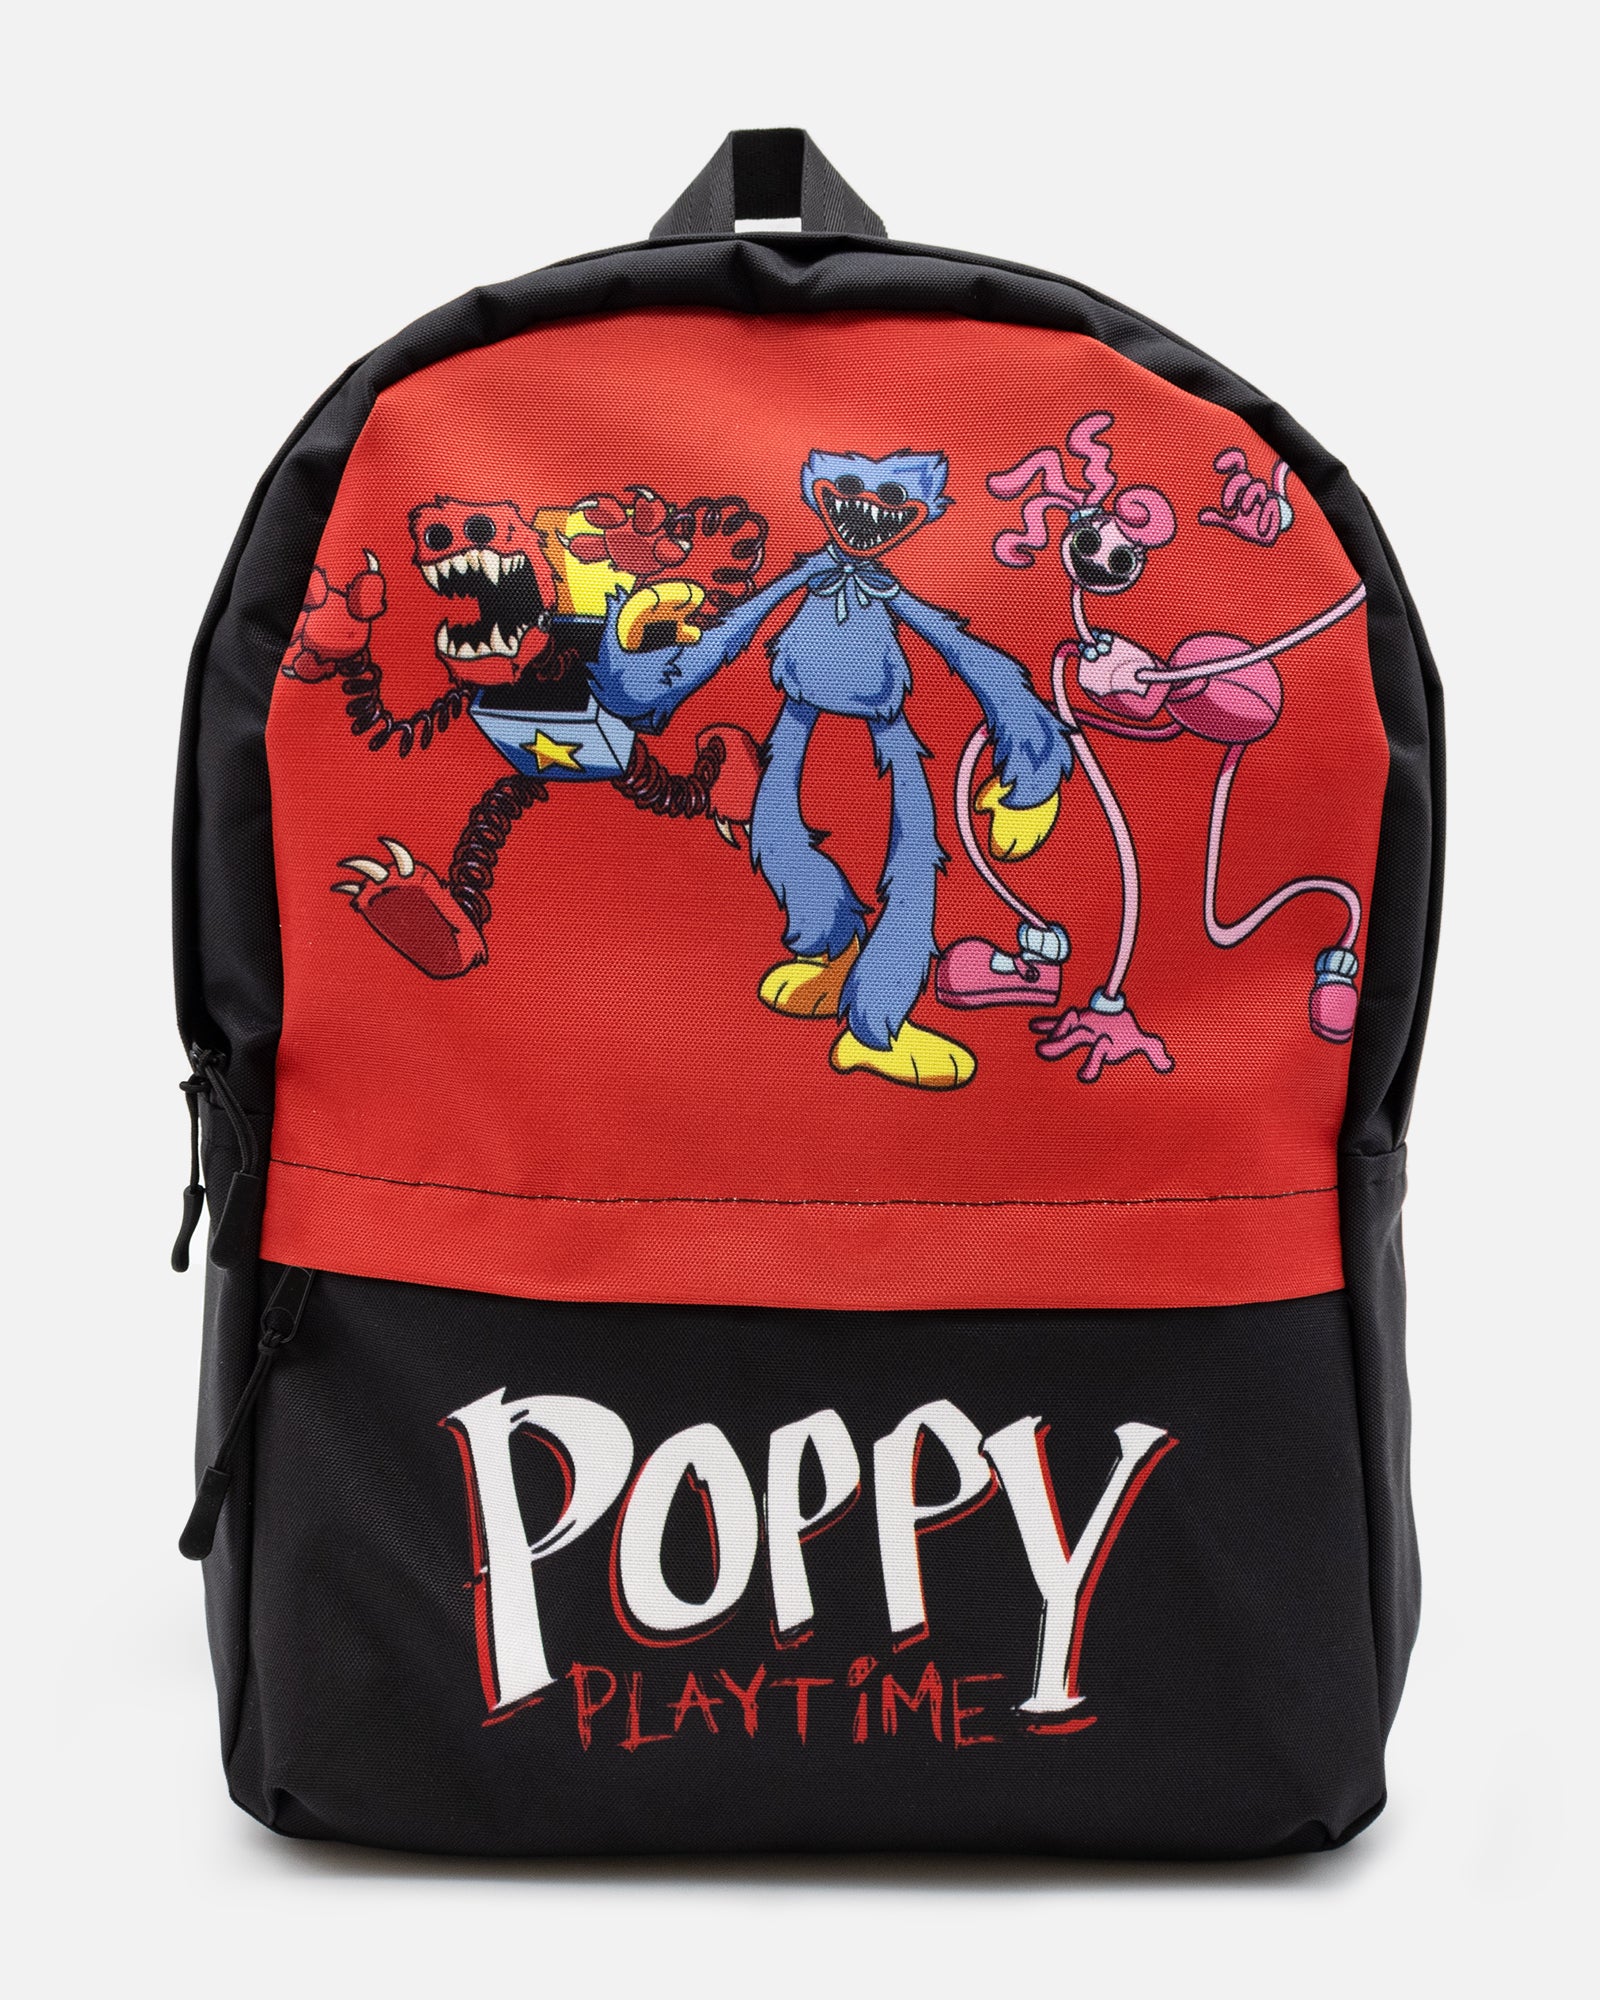 Buy Poppy Playtime, Huggy Wuggy Backpack ⋆ NEXTSHIRT